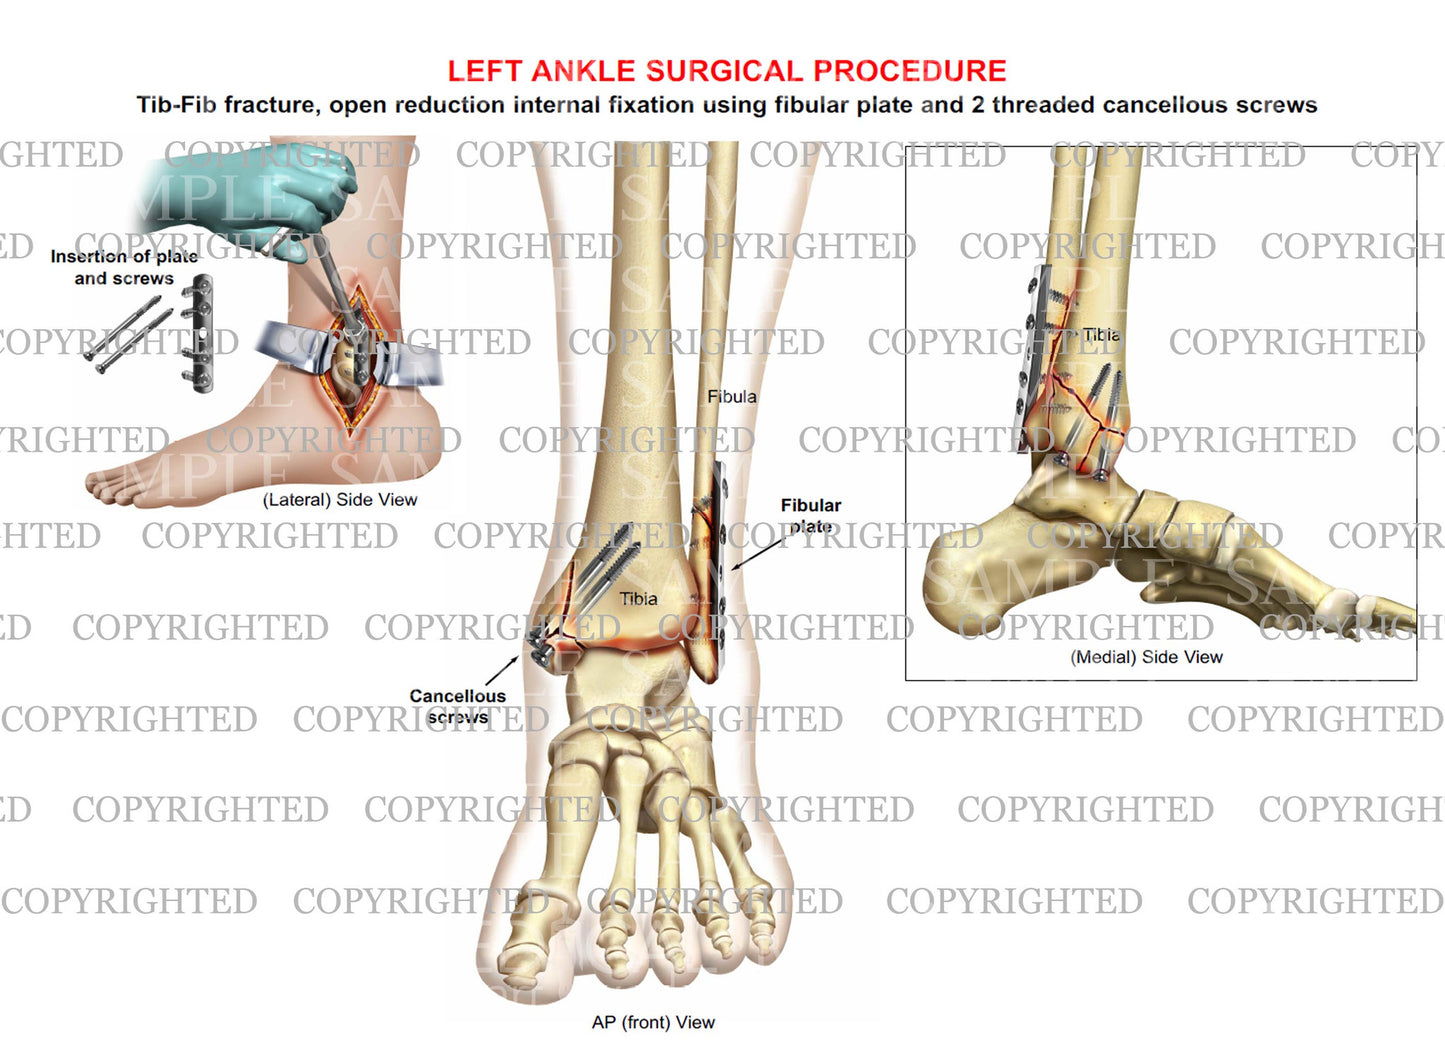 ORIF surgery of bimalleolar tib-fib fracture